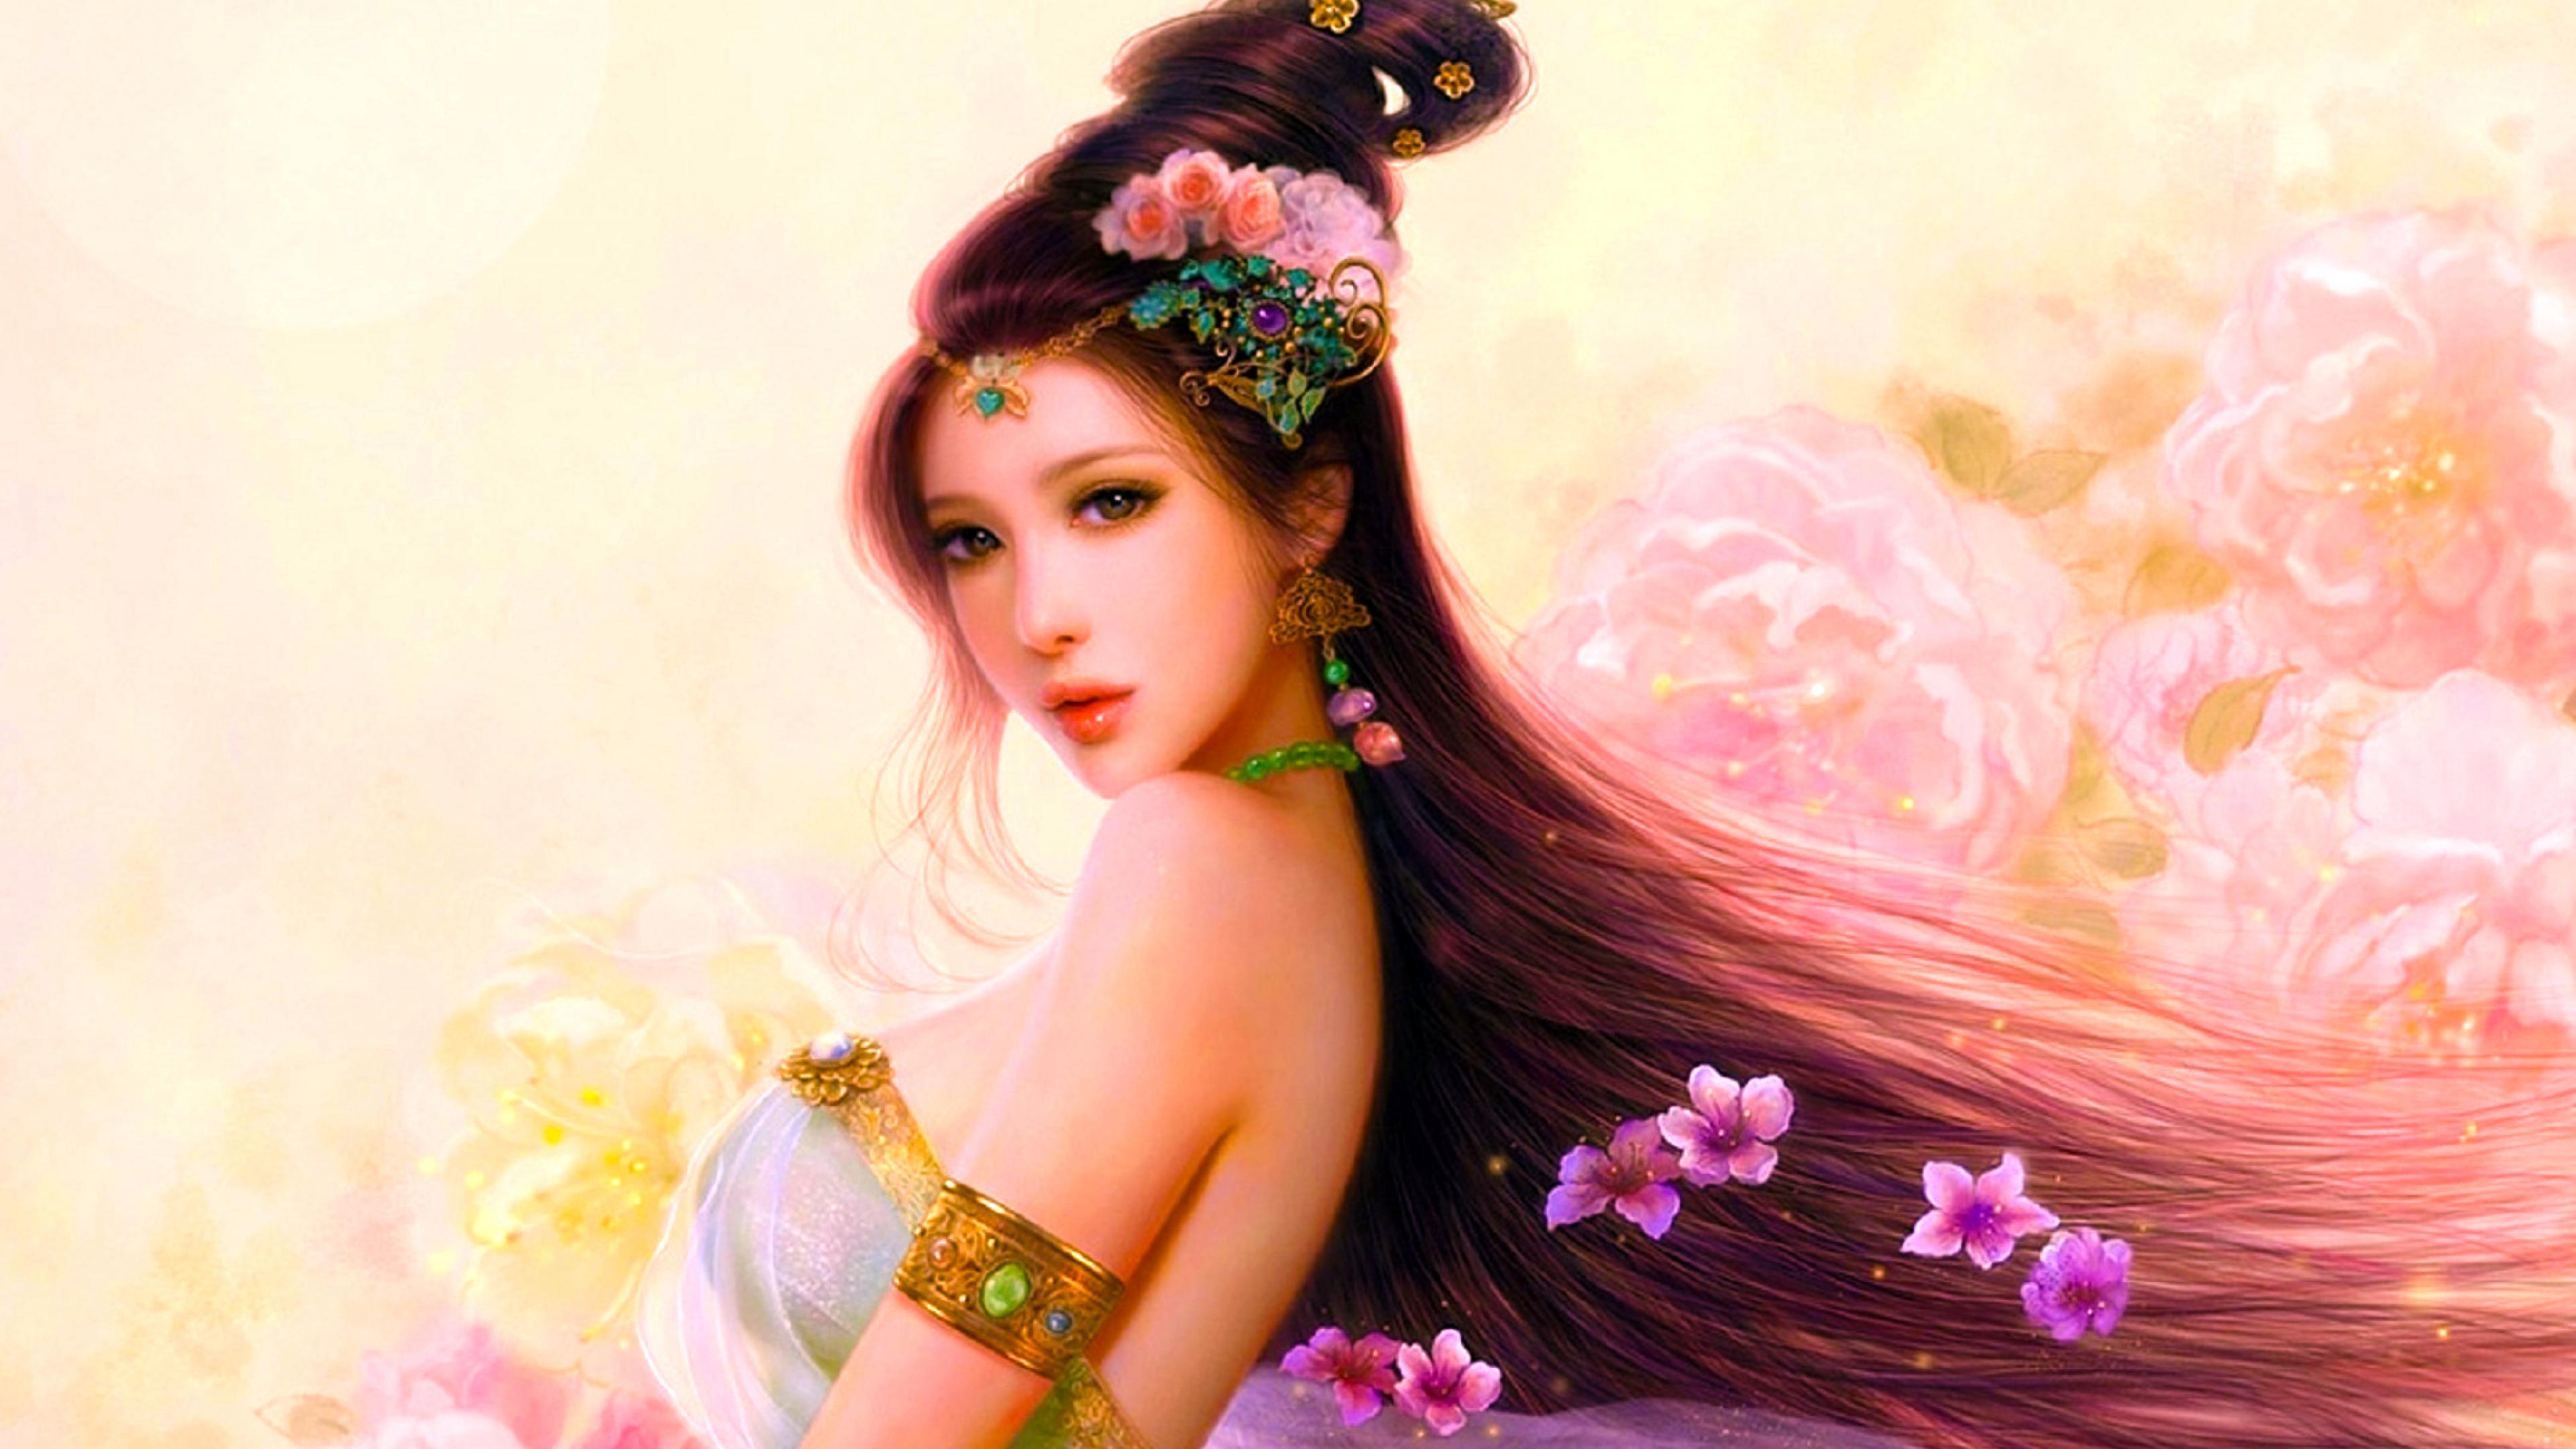 Pastel Beauty Art Cg Woman Asian Girl Ultra 3840x2160 Hd Wallpaper